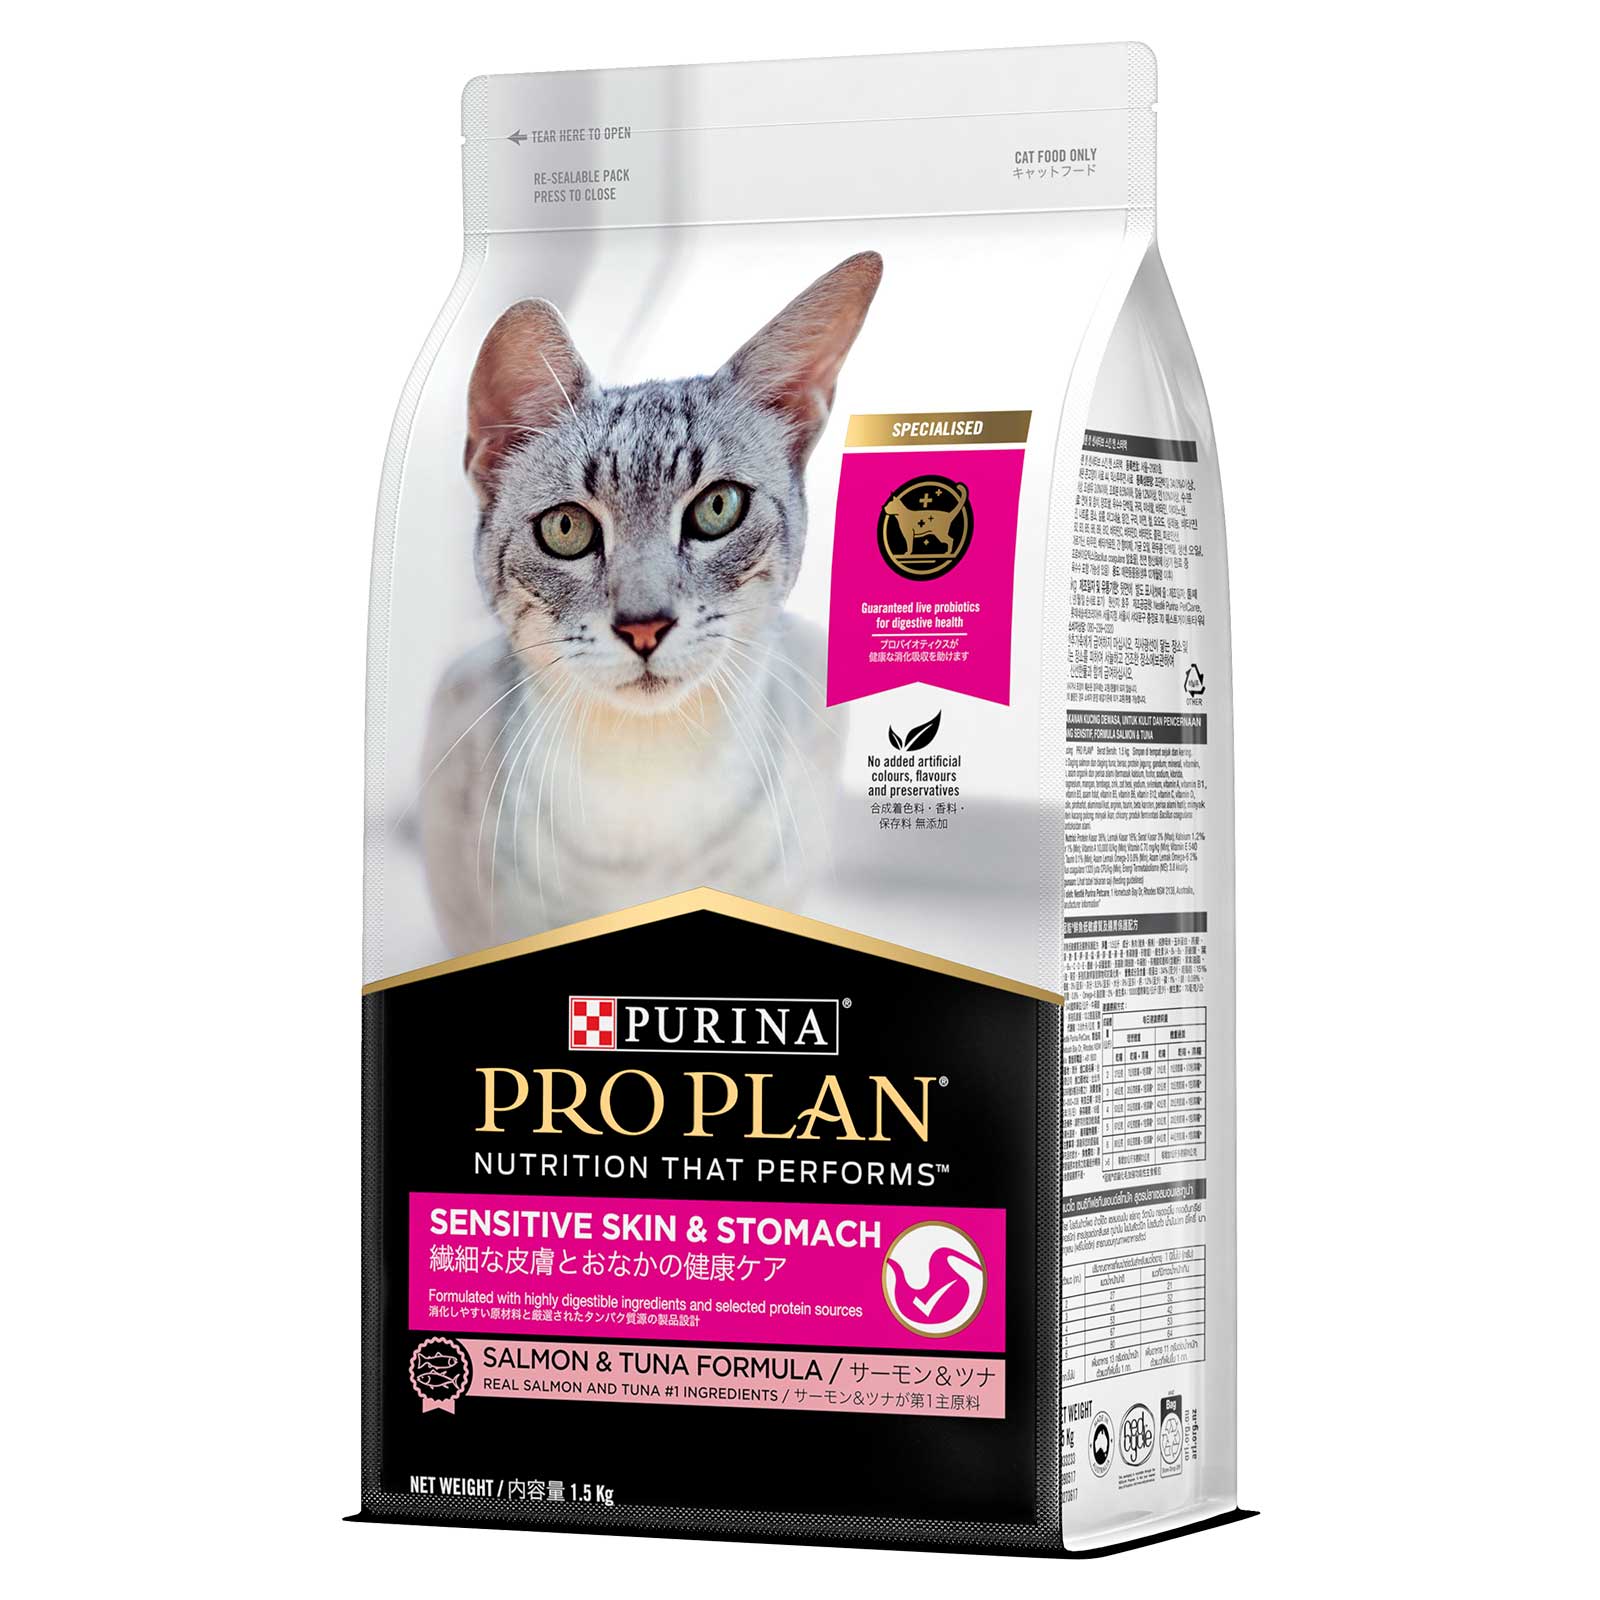 Pro Plan Cat Food Adult Sensitive Skin & Stomach